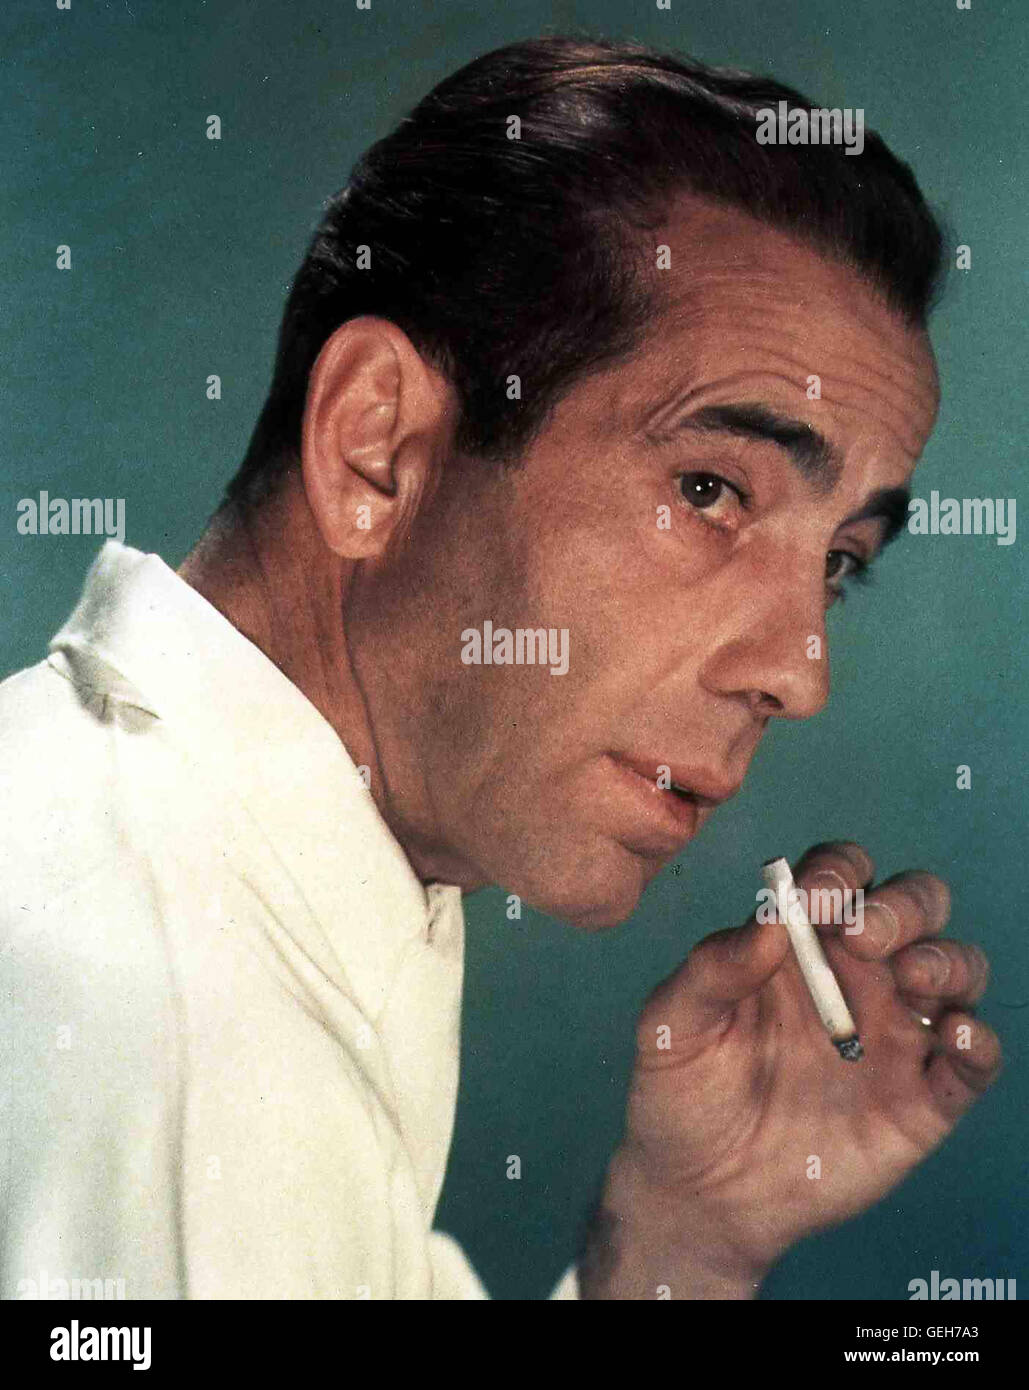 Humphrey Bogart *** Local Caption *** 0, Bogart, Humphrey, Humphrey Bogart Stock Photo